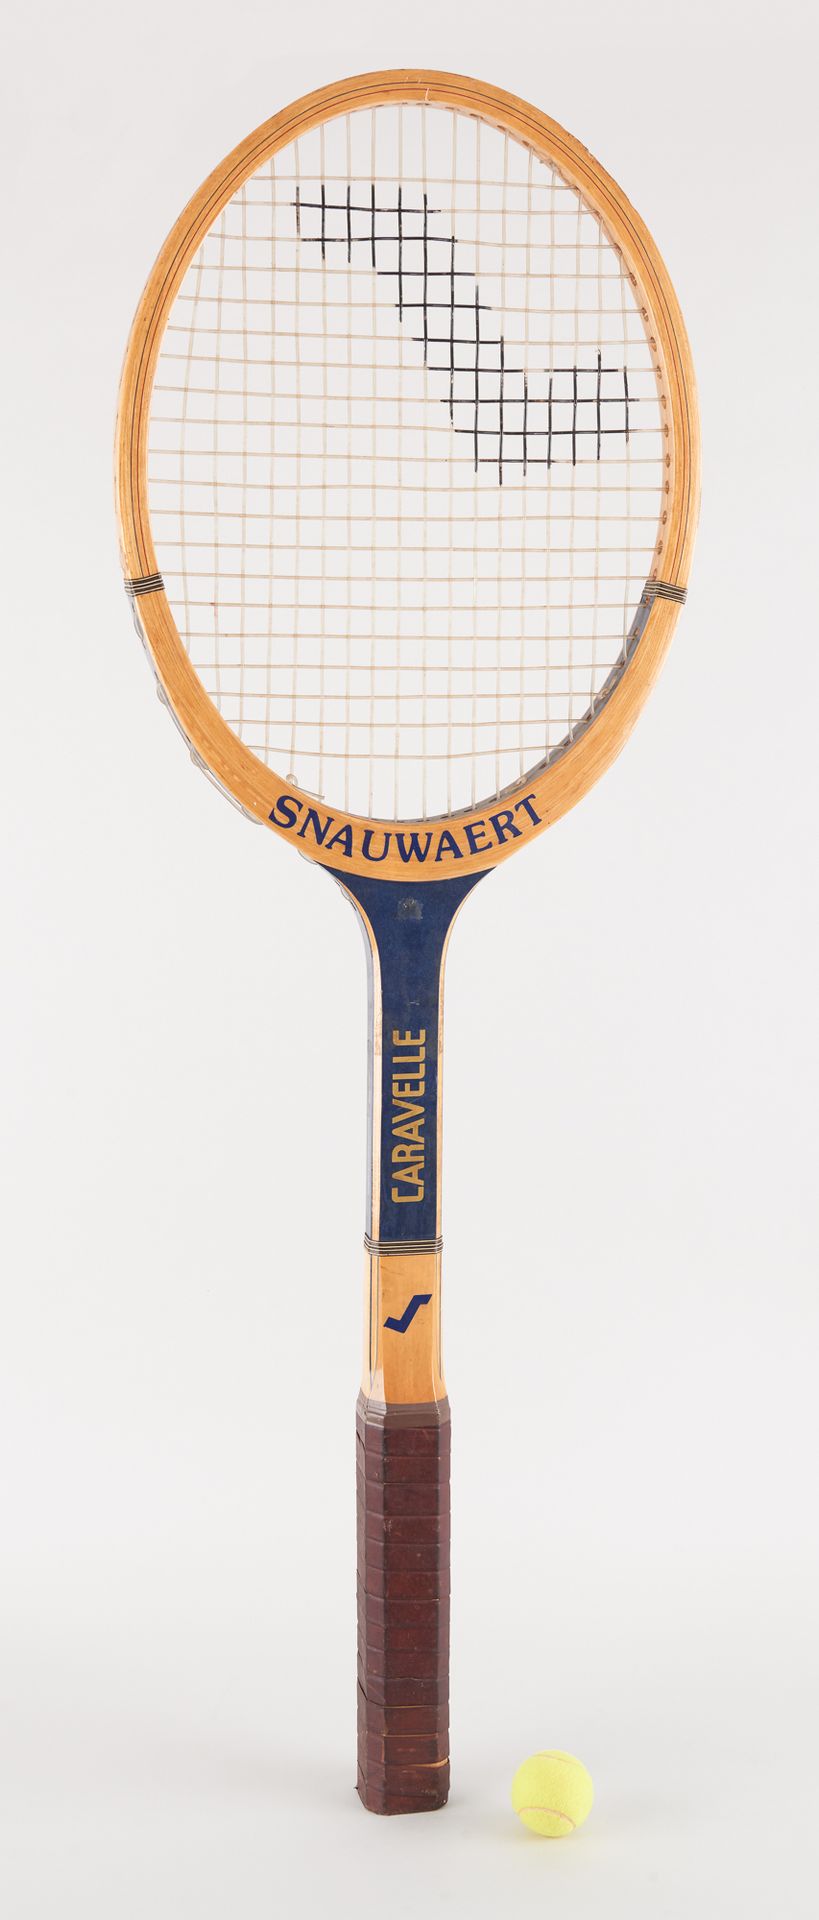 Snauwaert. Objeto artístico: raqueta de tenis promocional.

Marca Snauwaert, mod&hellip;